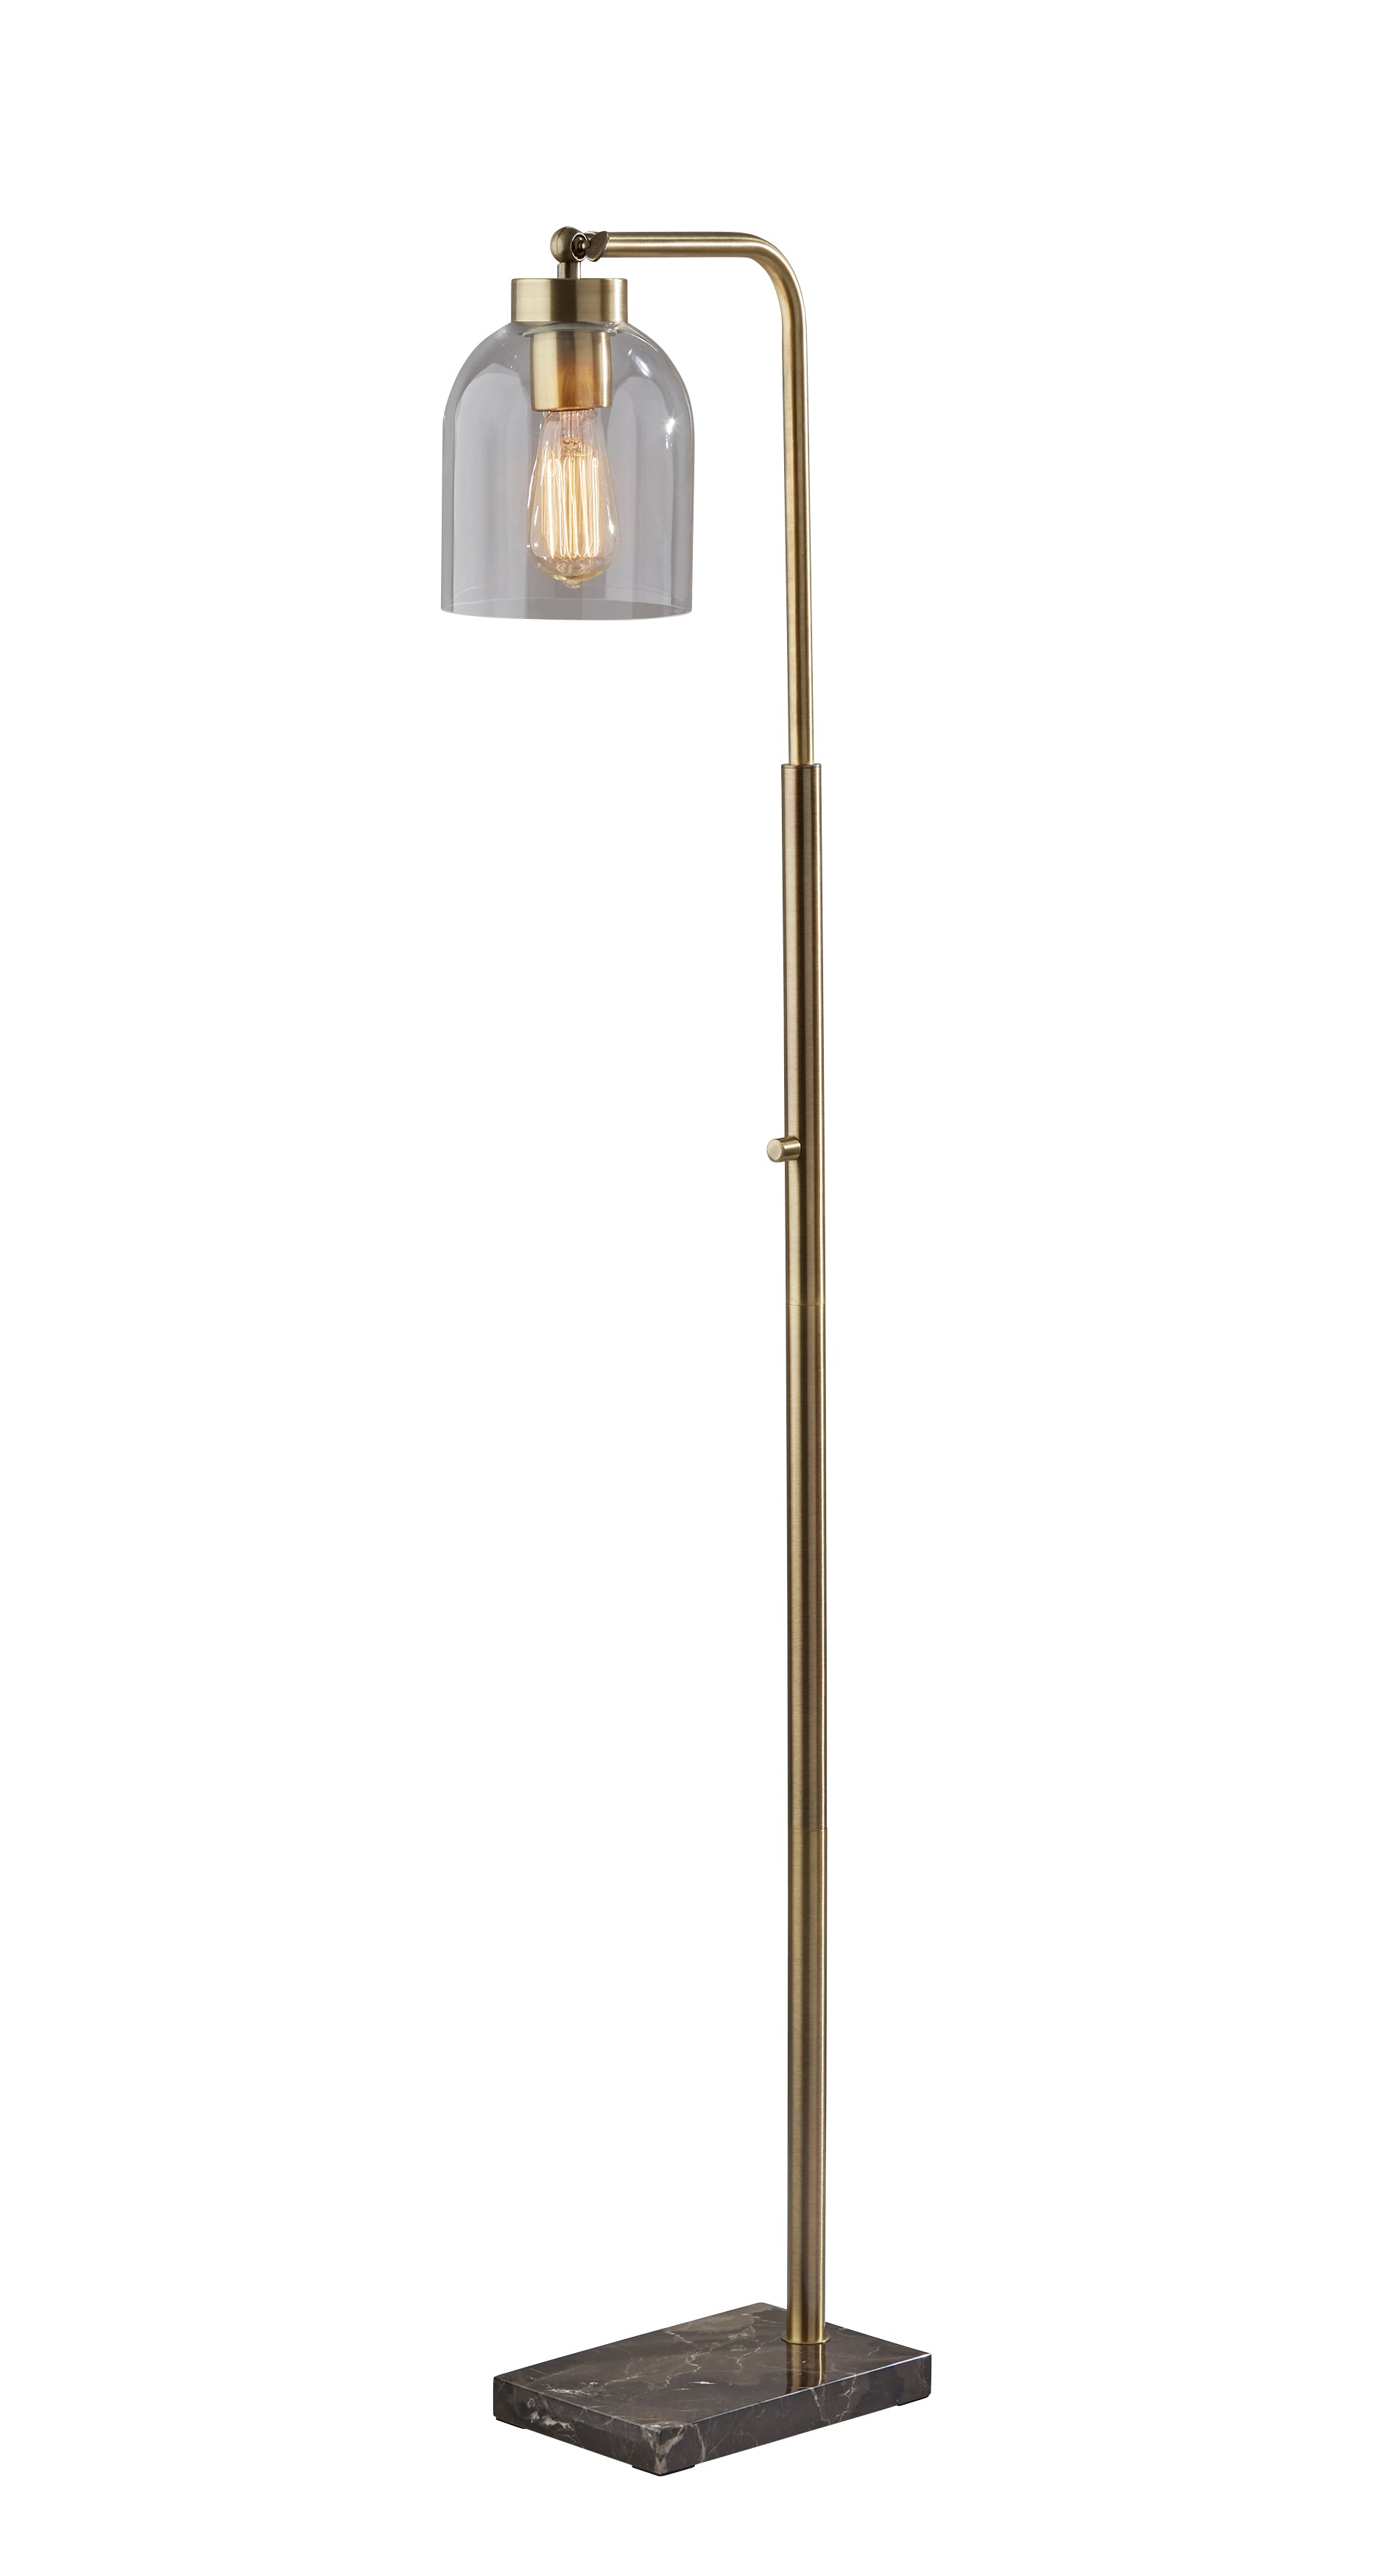 BRISTOL Lampe sur pied Or - 4289-21 | ADESSO